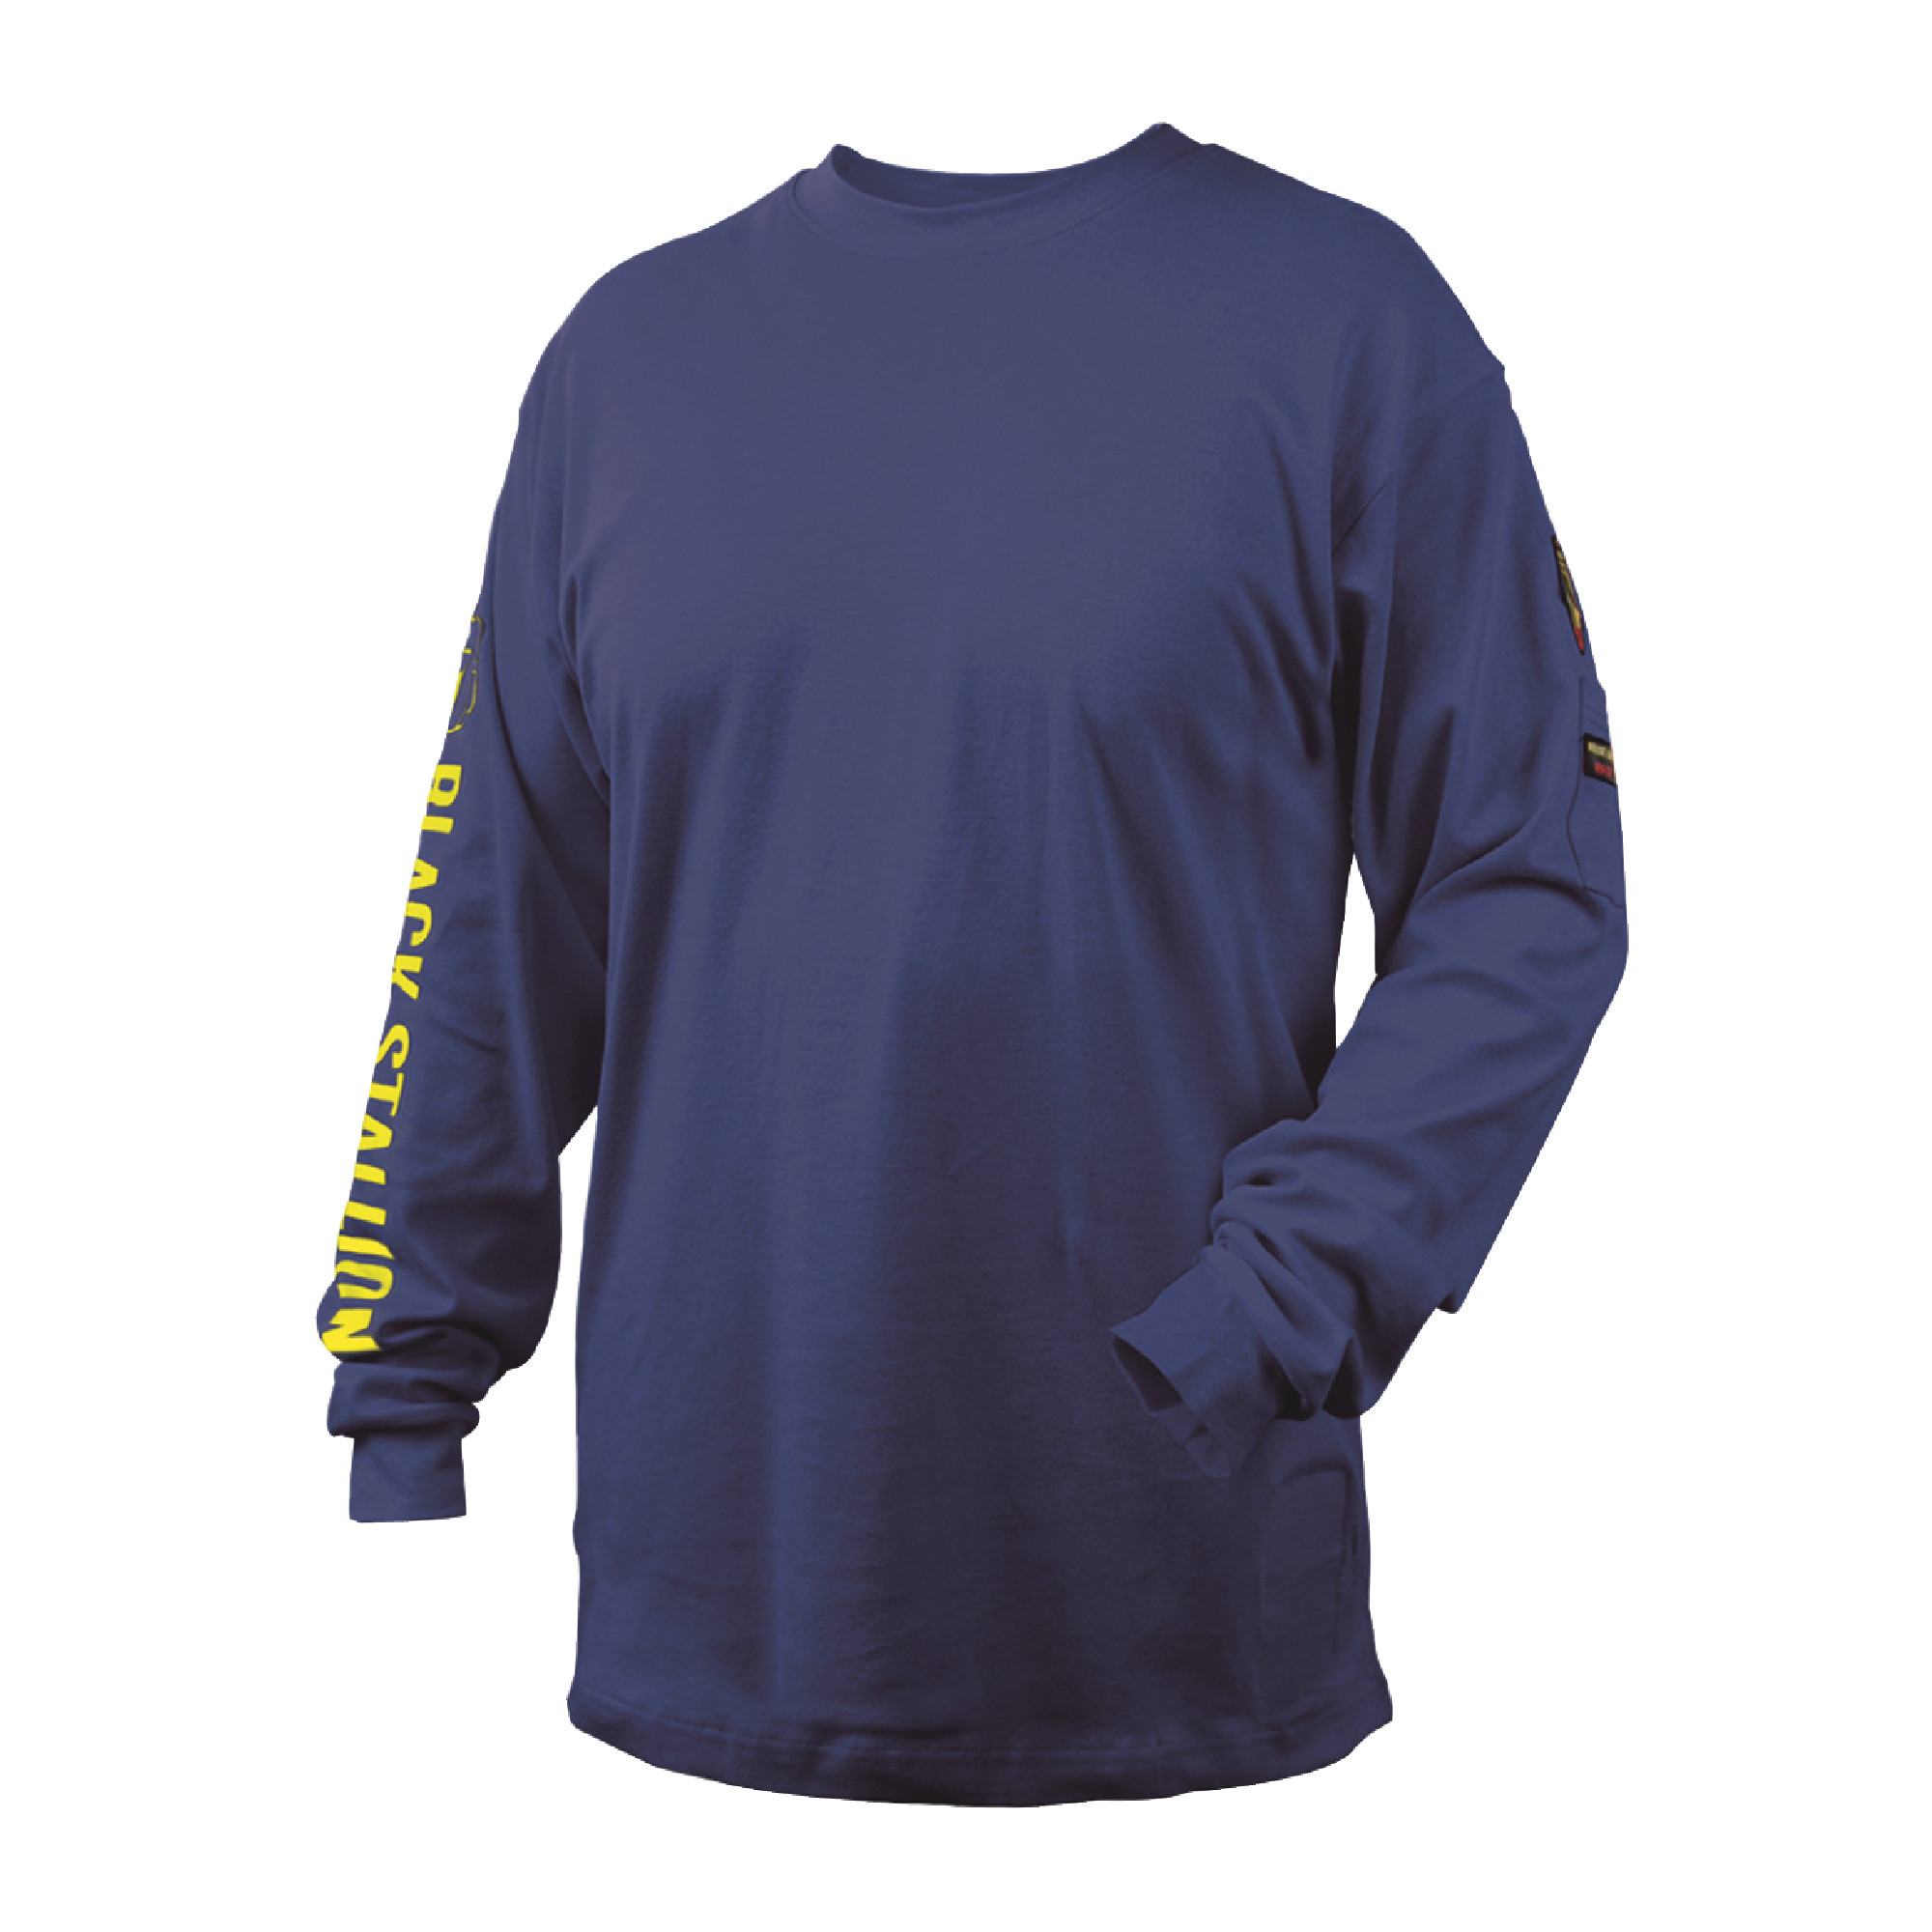 Black Stallion Navy Blue Long Sleeve Flame Resistant Welding T-Shirt - Size M